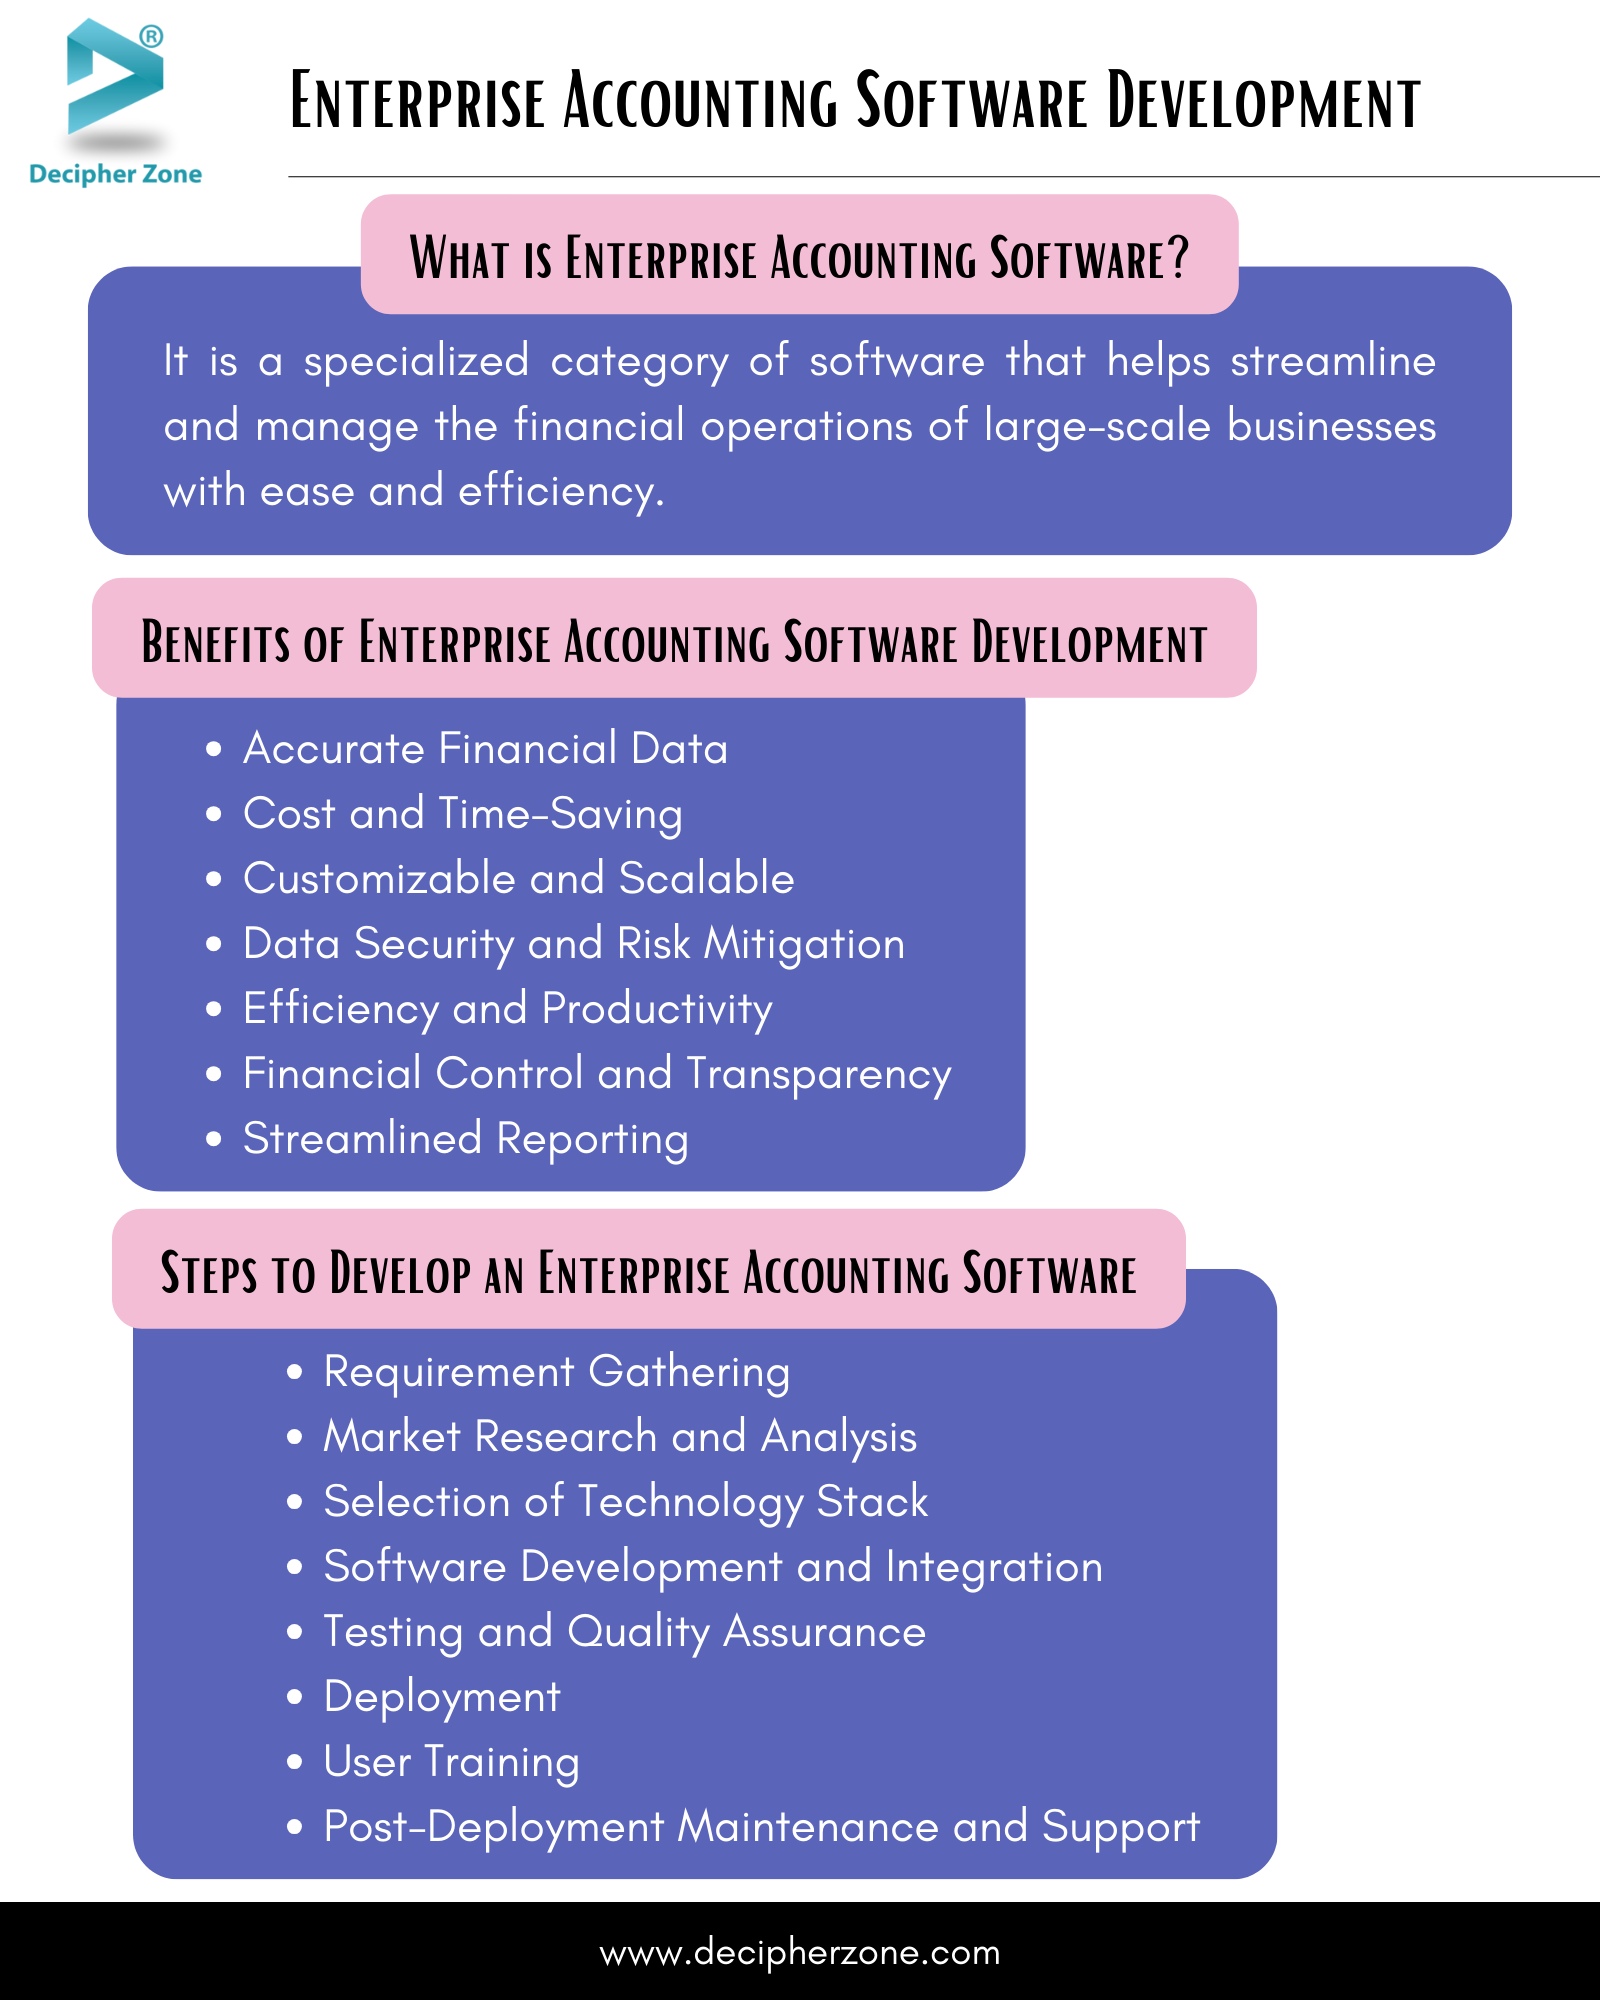 Enterprise Accounting Software Development 